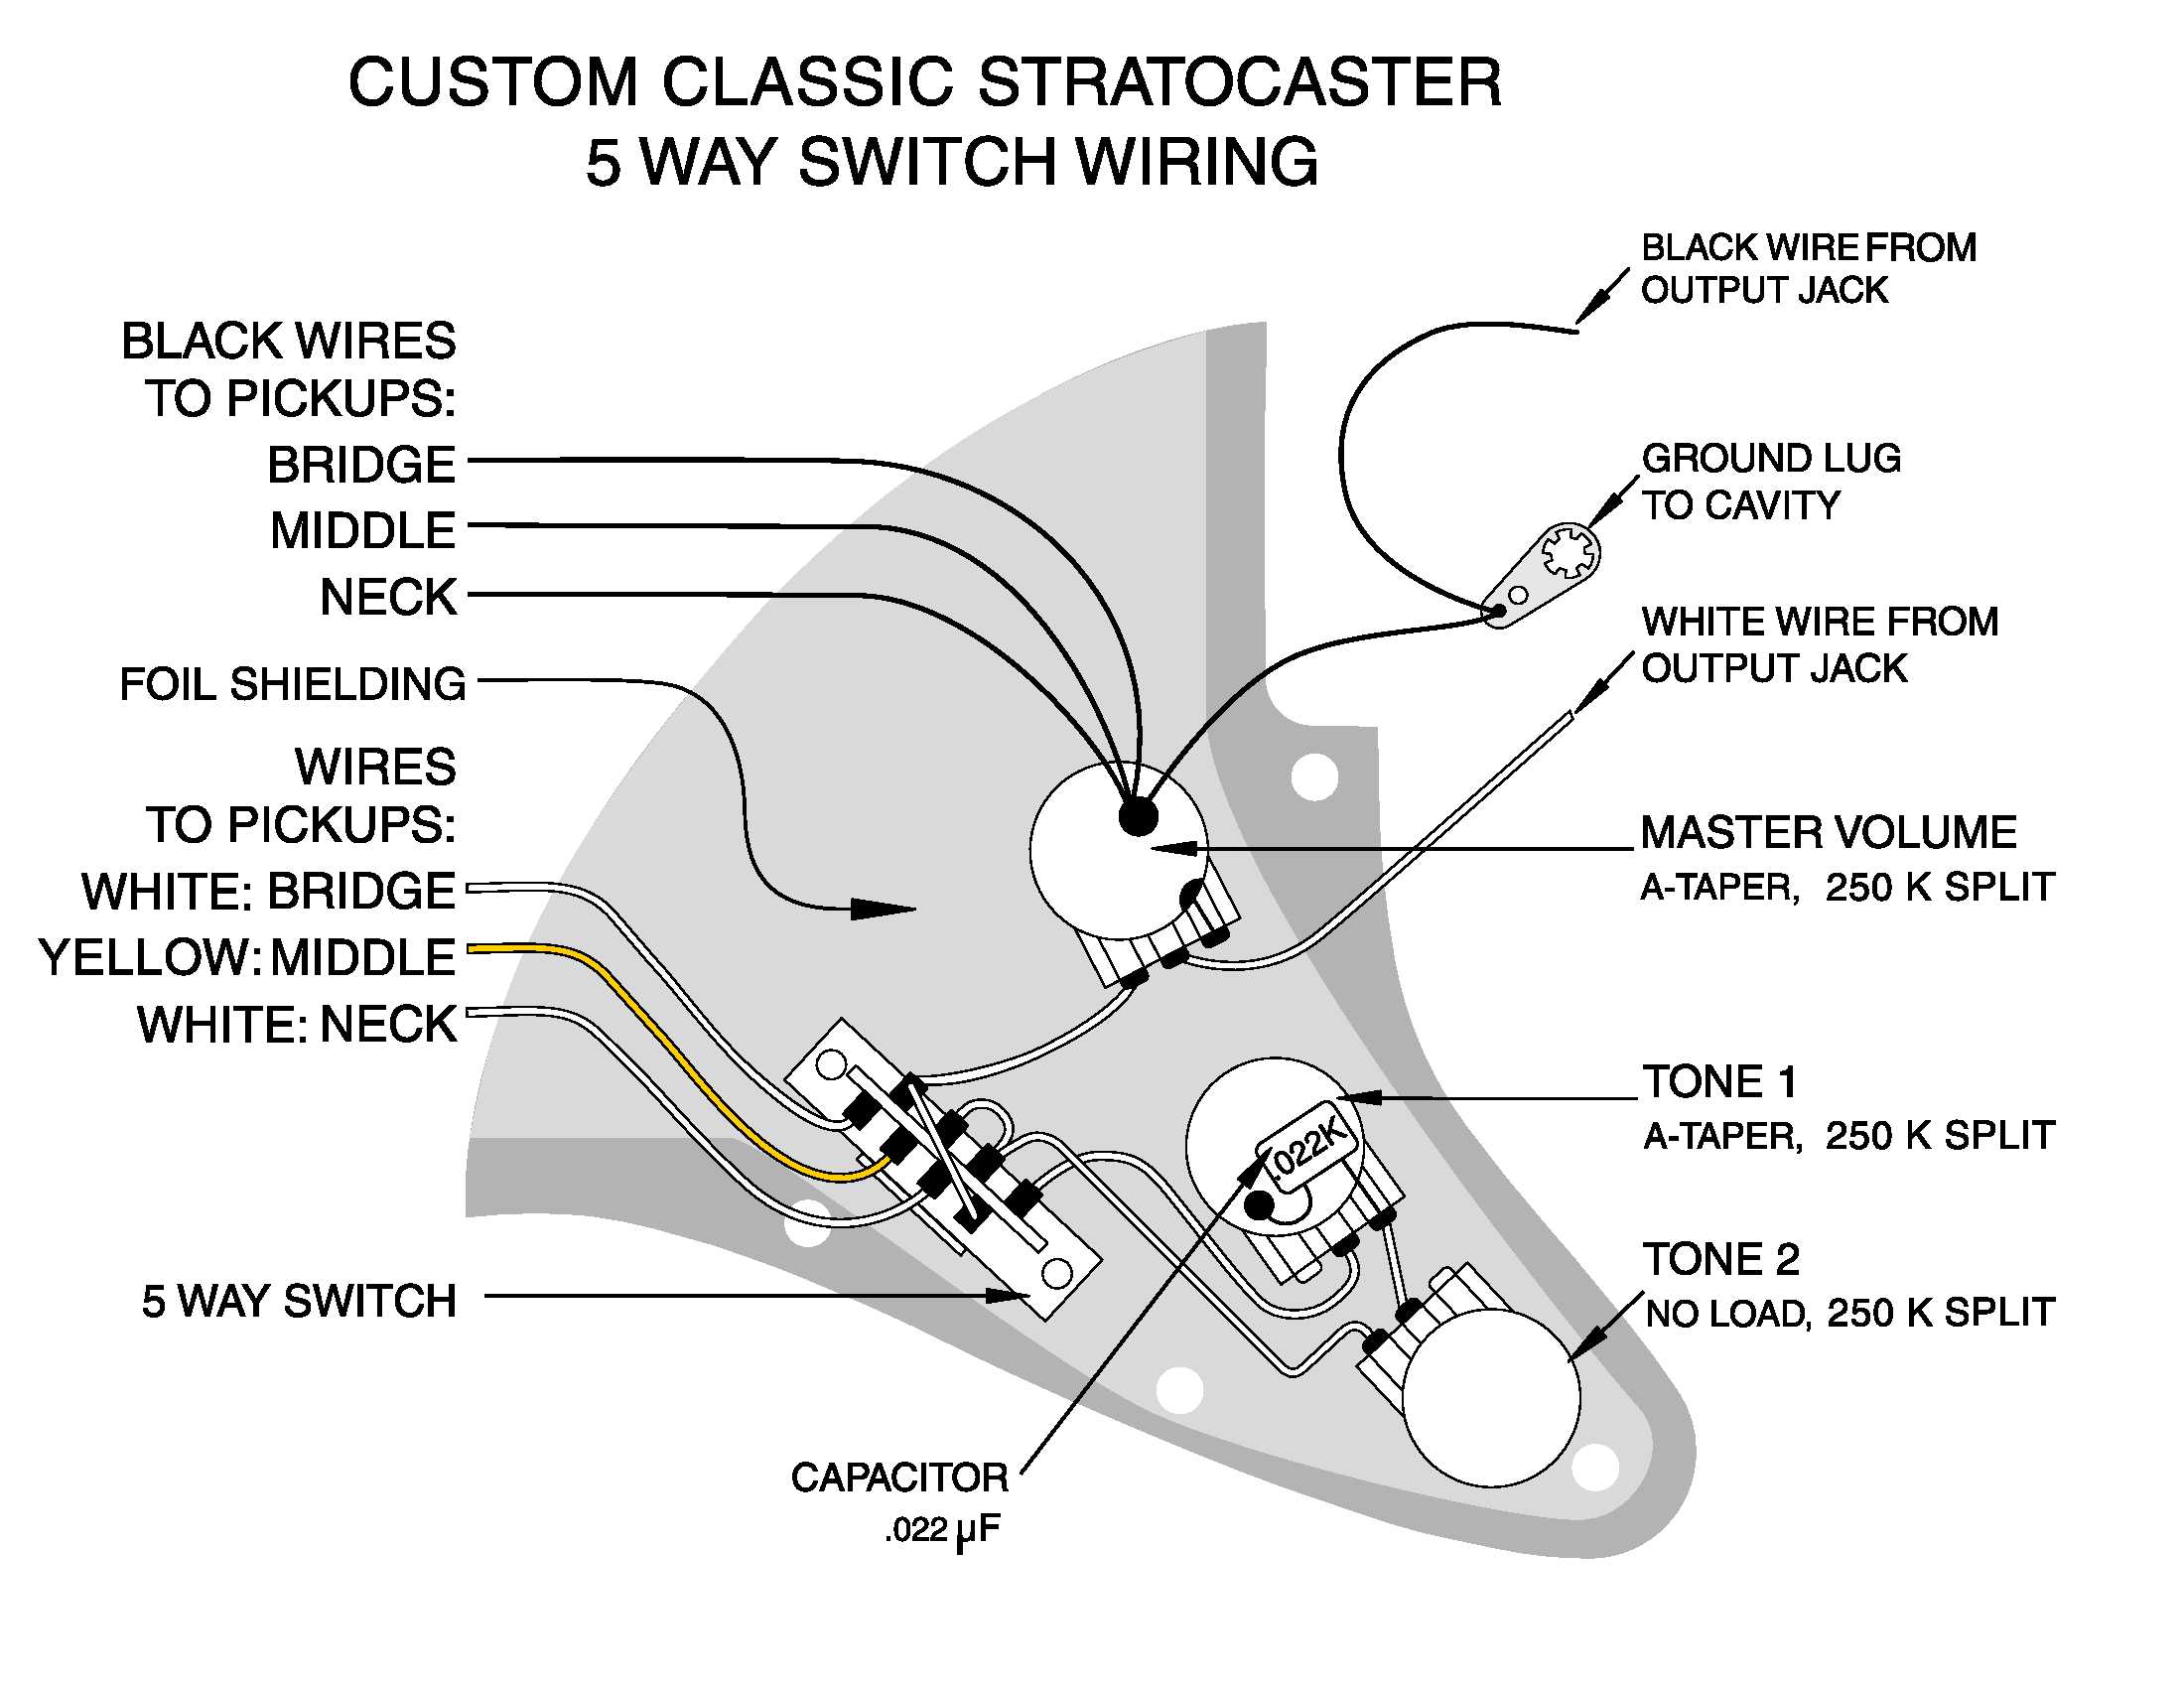 Custom Classic Stratocaster Wiring Diagram · Customer Self-Service